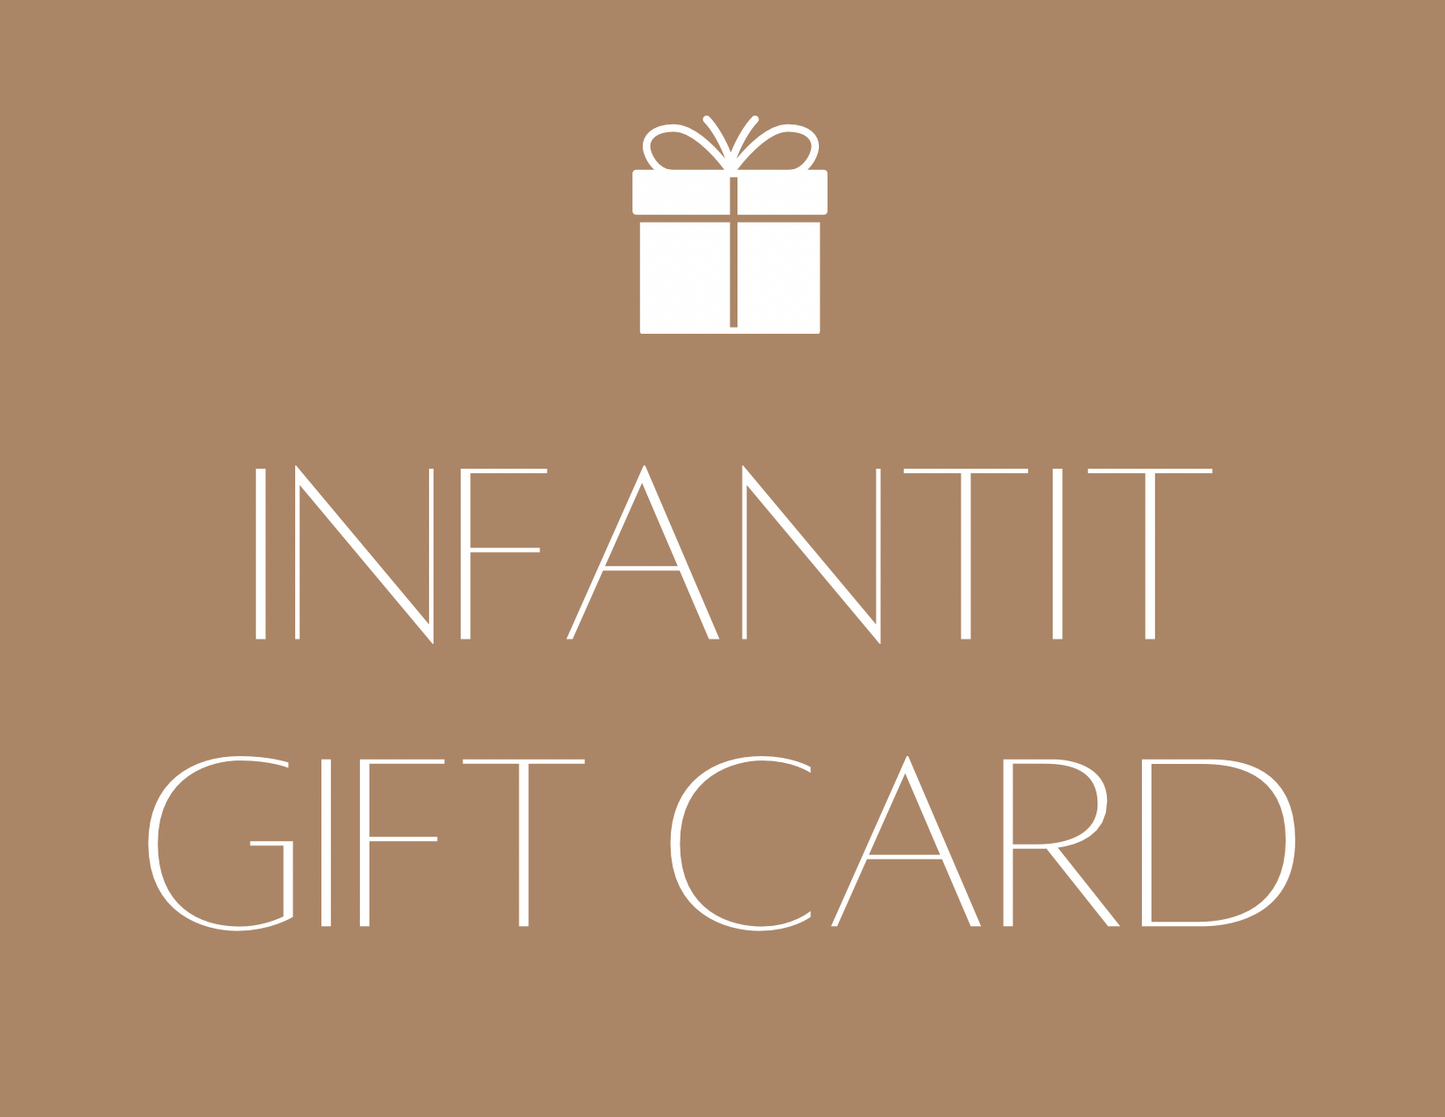 Infantit Gift Card